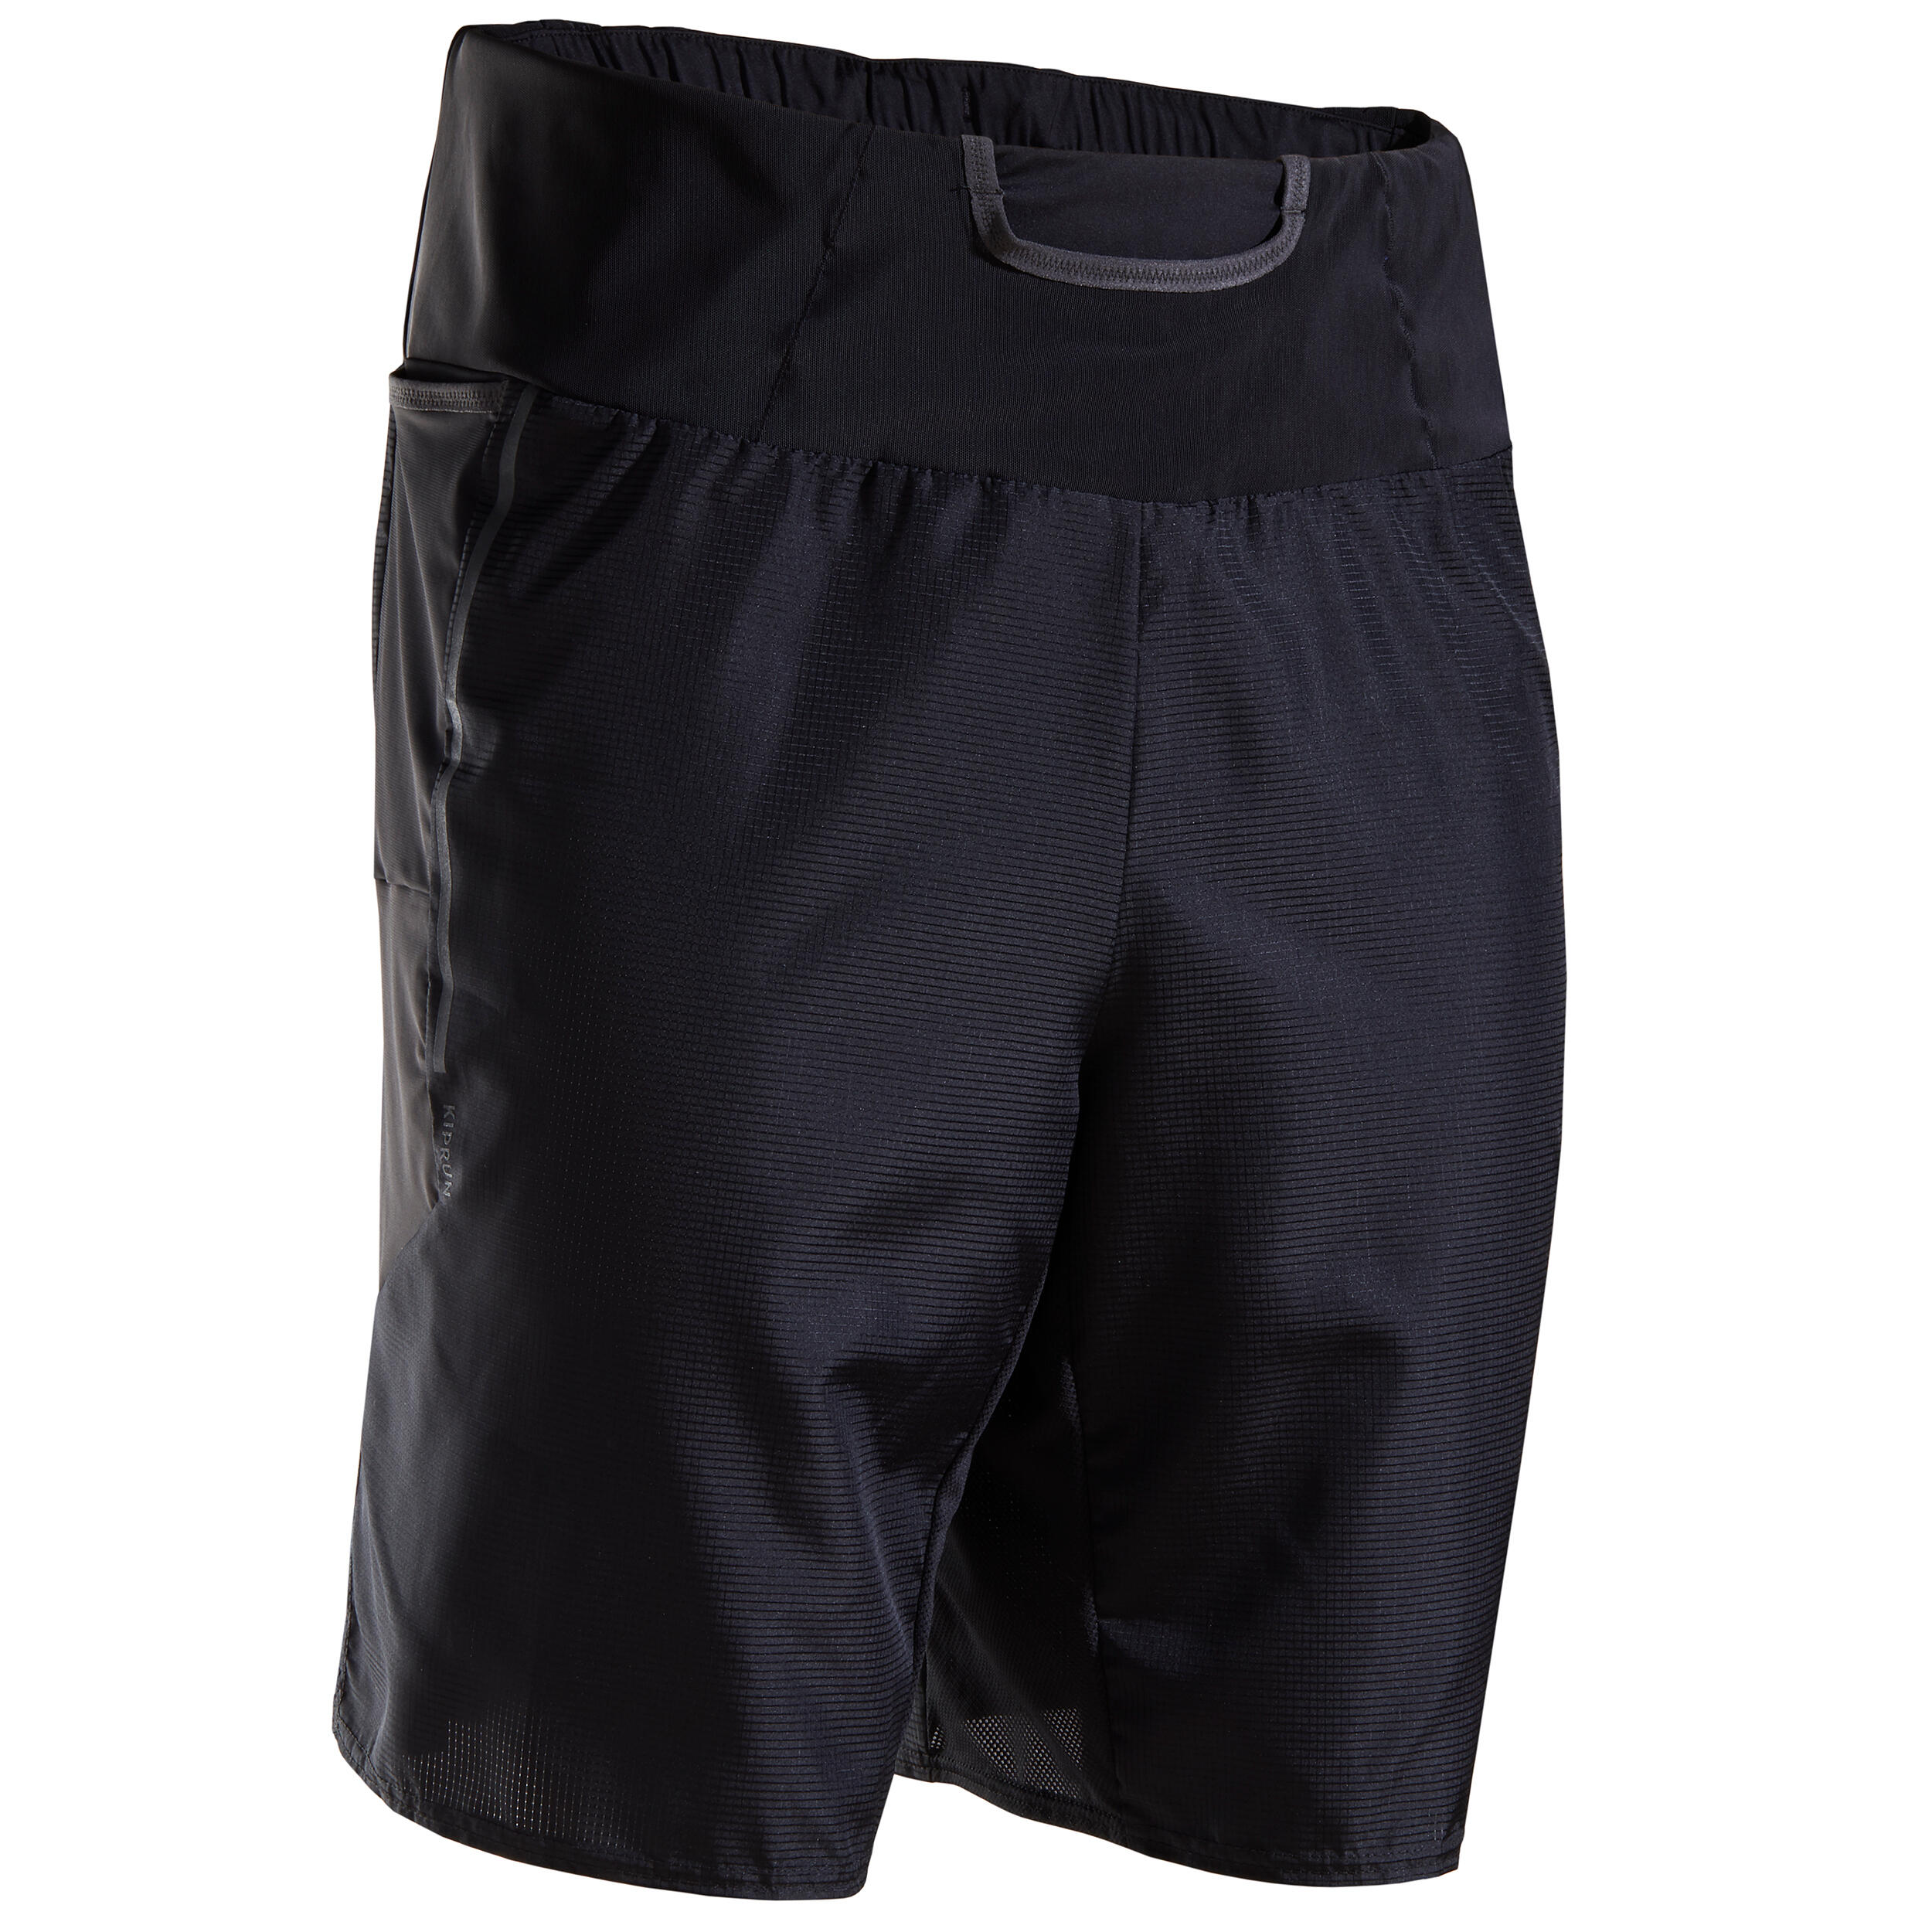 decathlon shorts